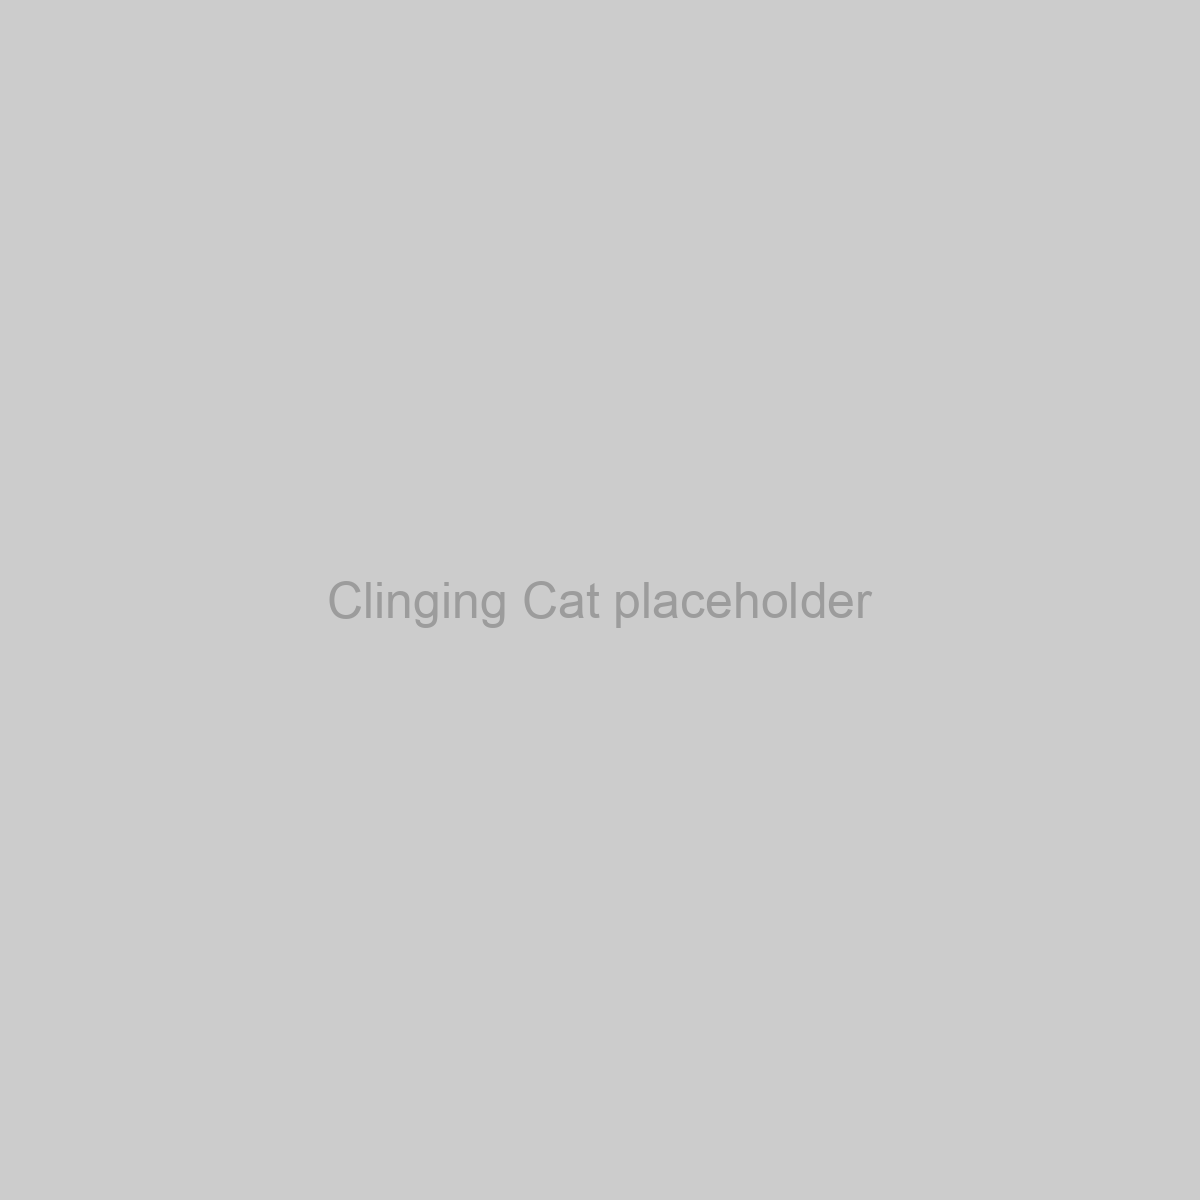 Clinging Cat Placeholder Image